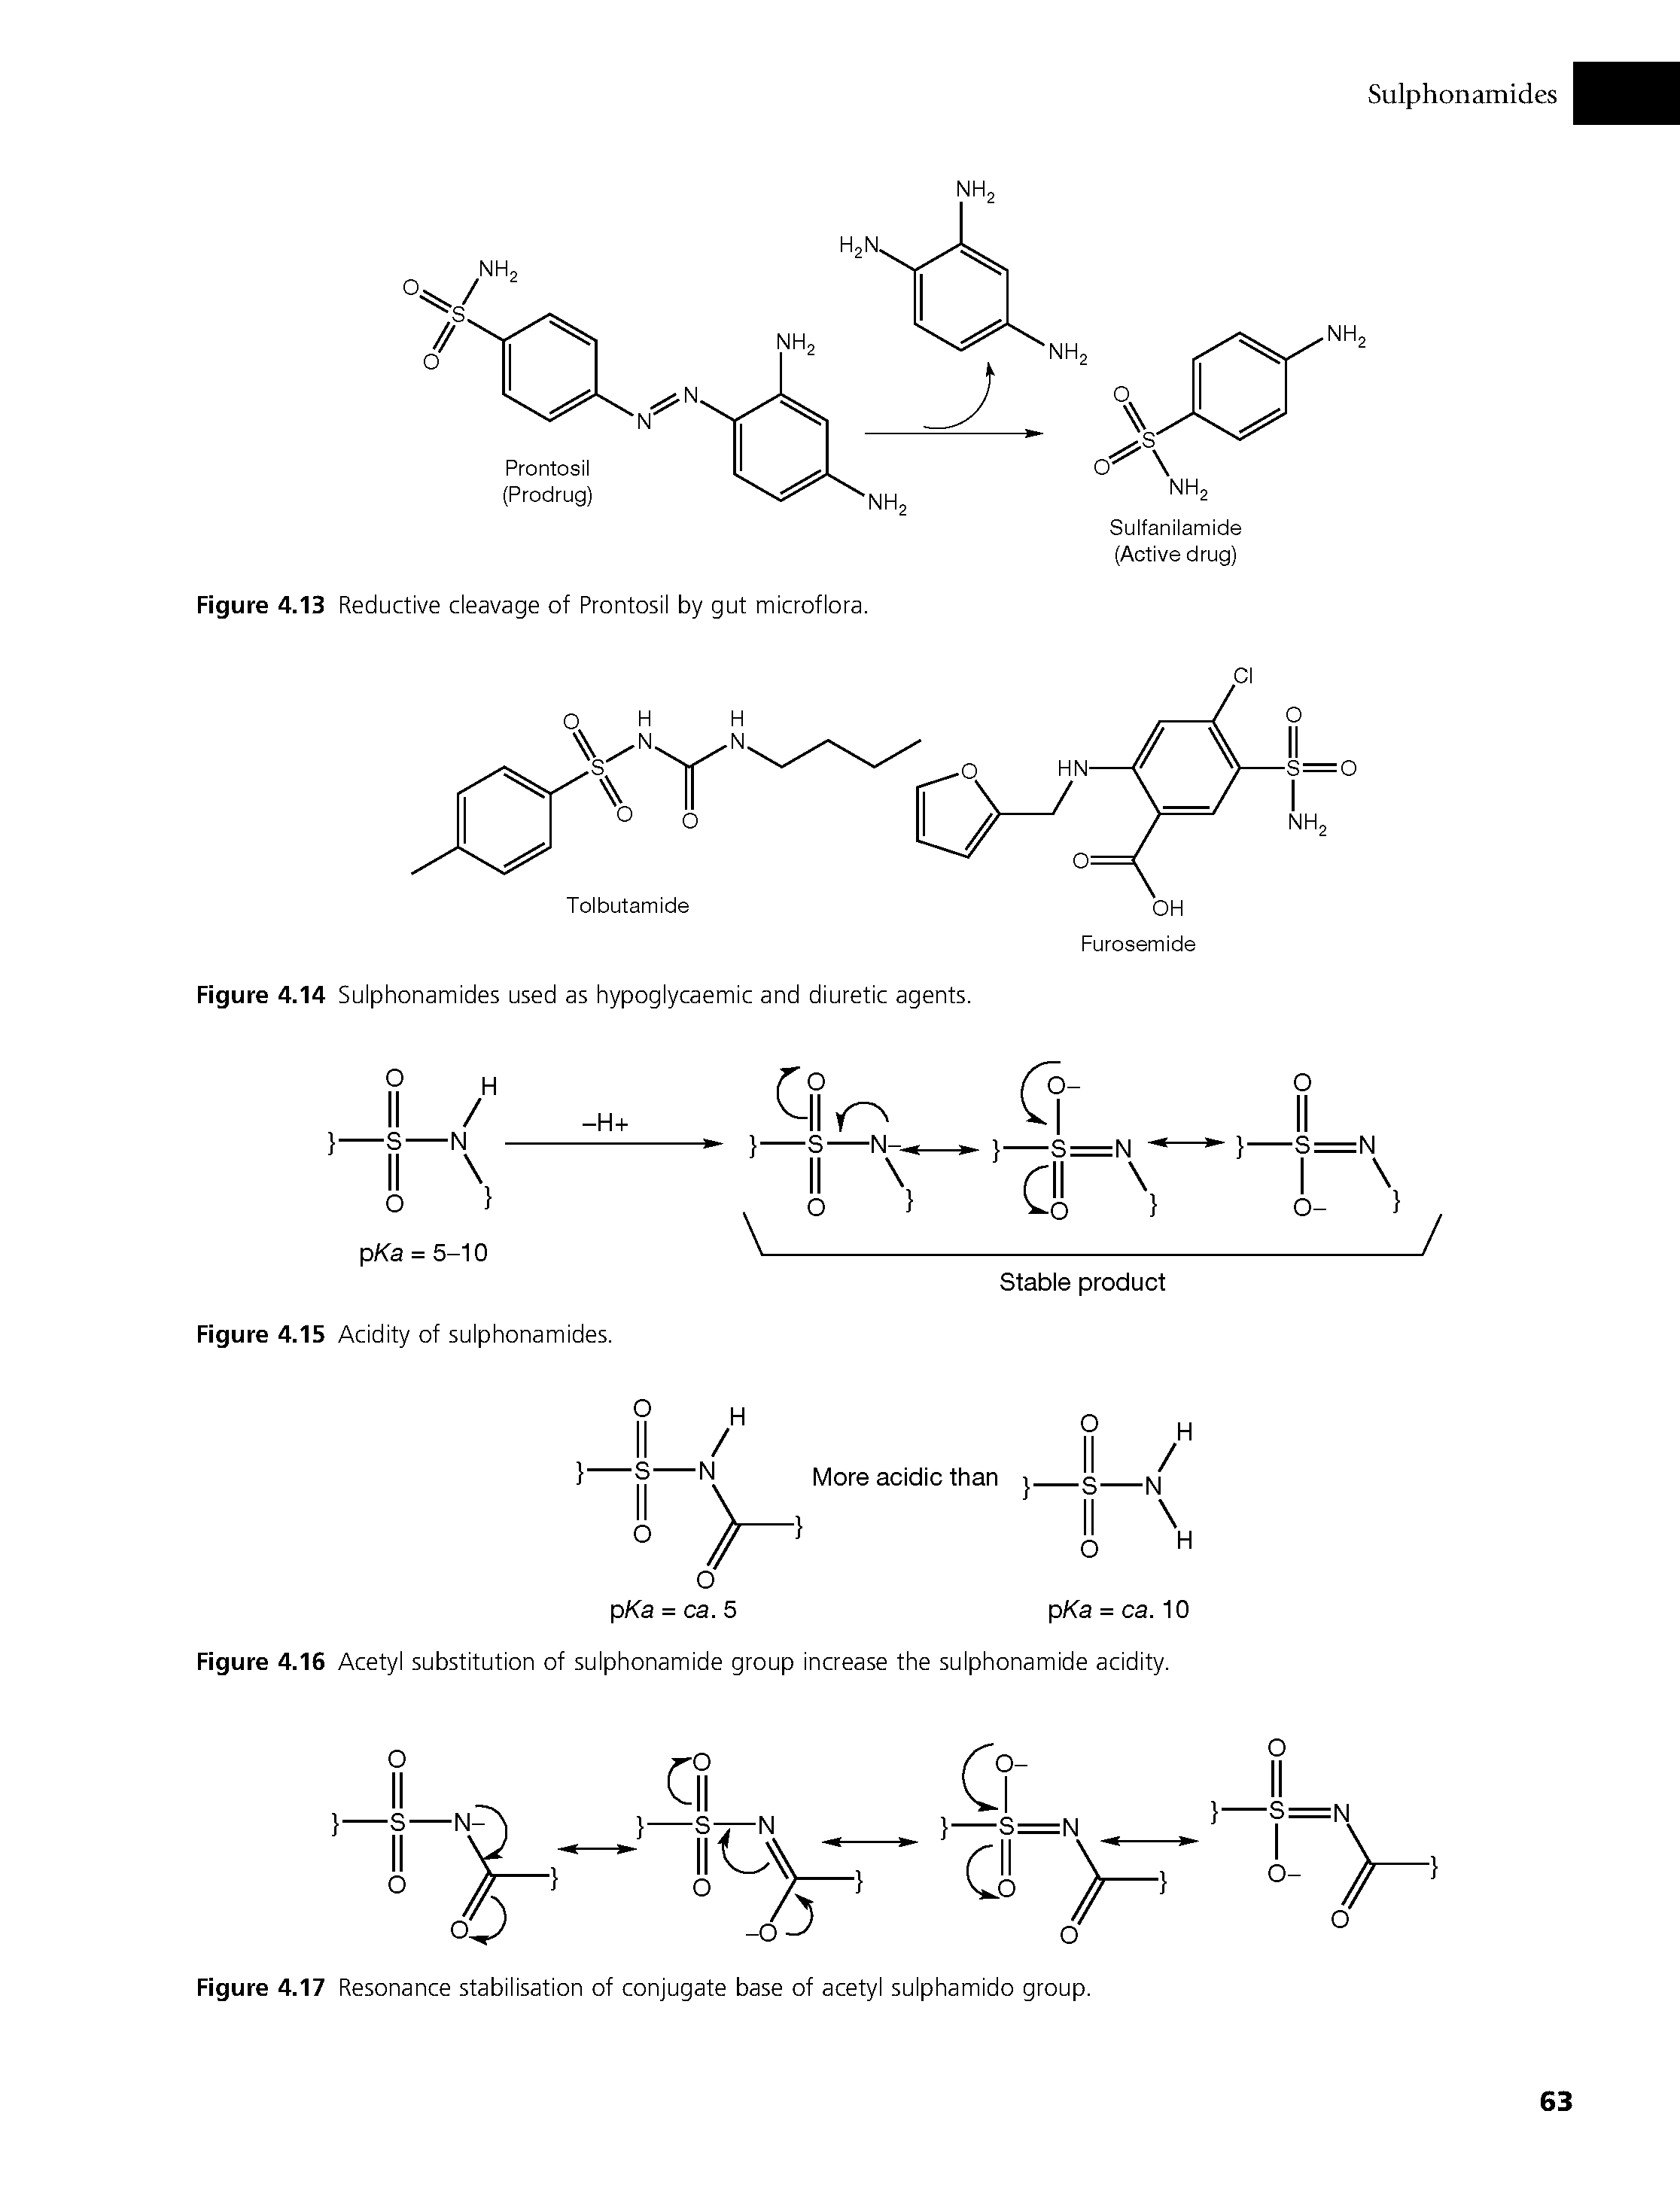 Figure 4.17 Resonance stabilisation of conjugate base of acetyl sulphamido group.